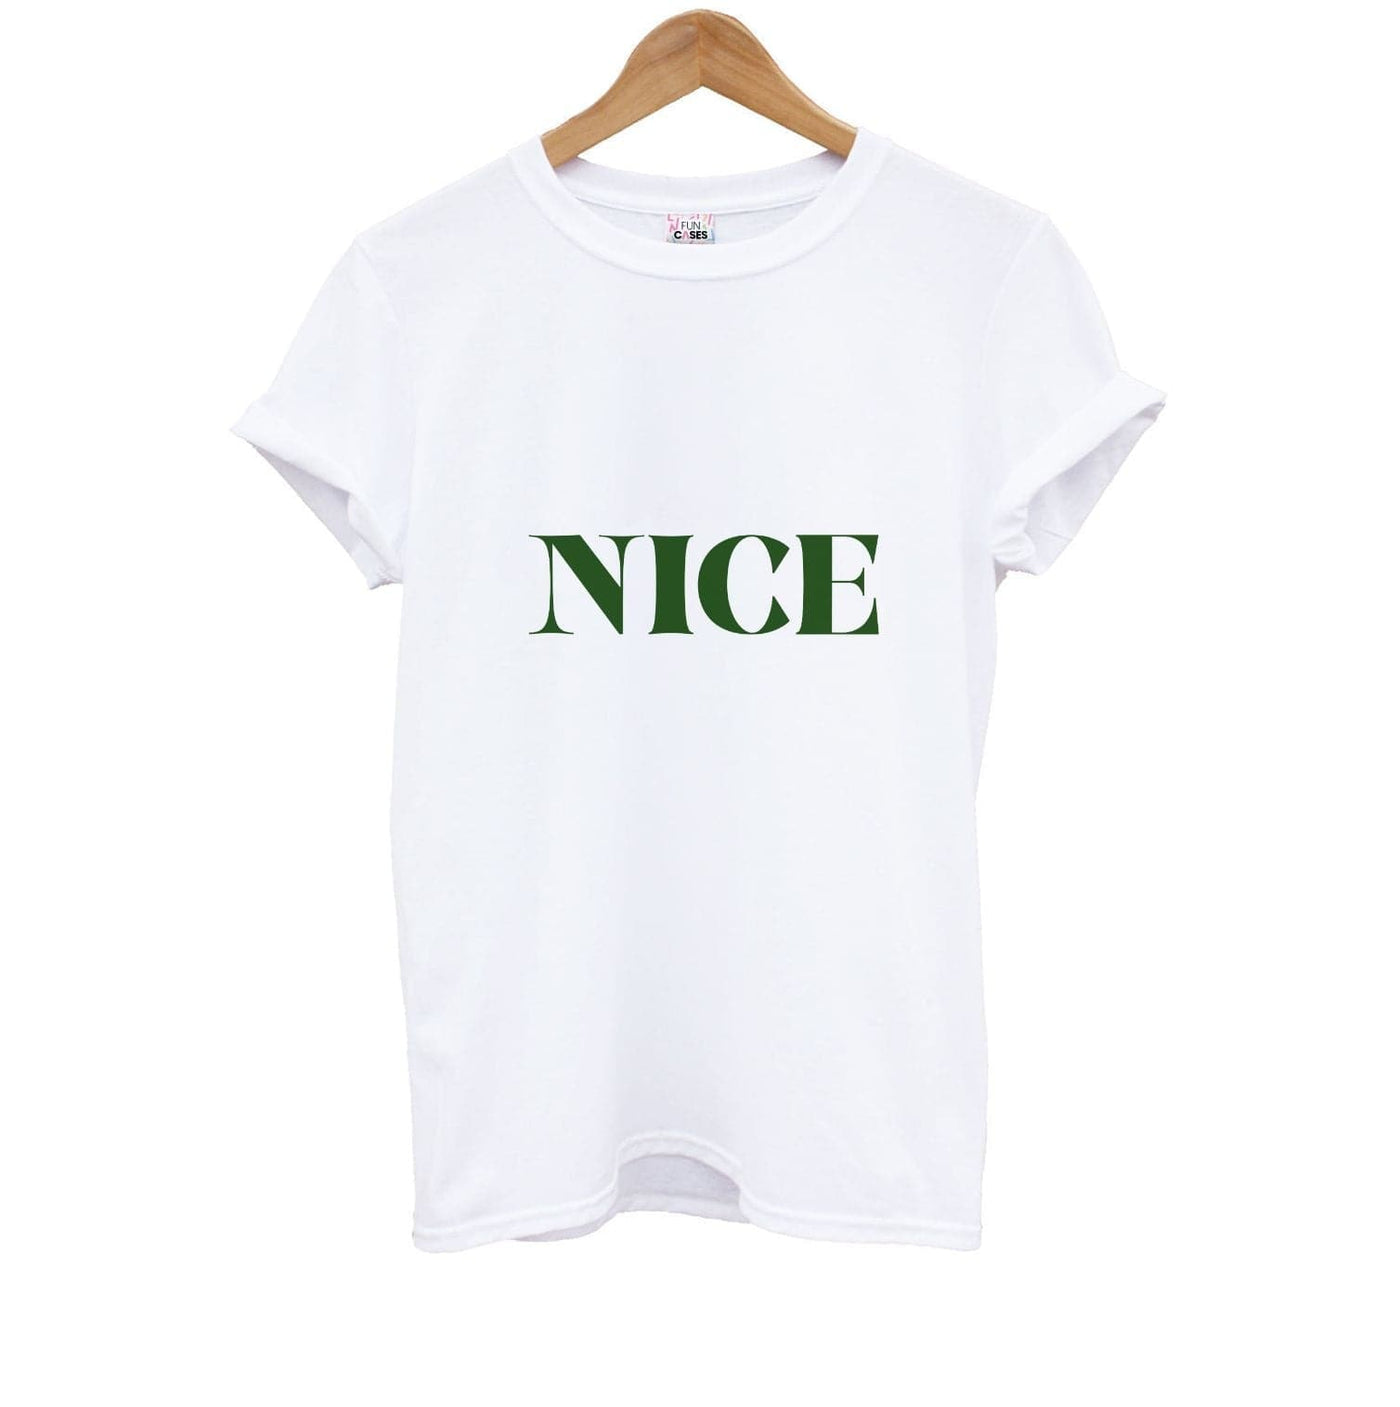 Nice - Naughty Or Nice  Kids T-Shirt